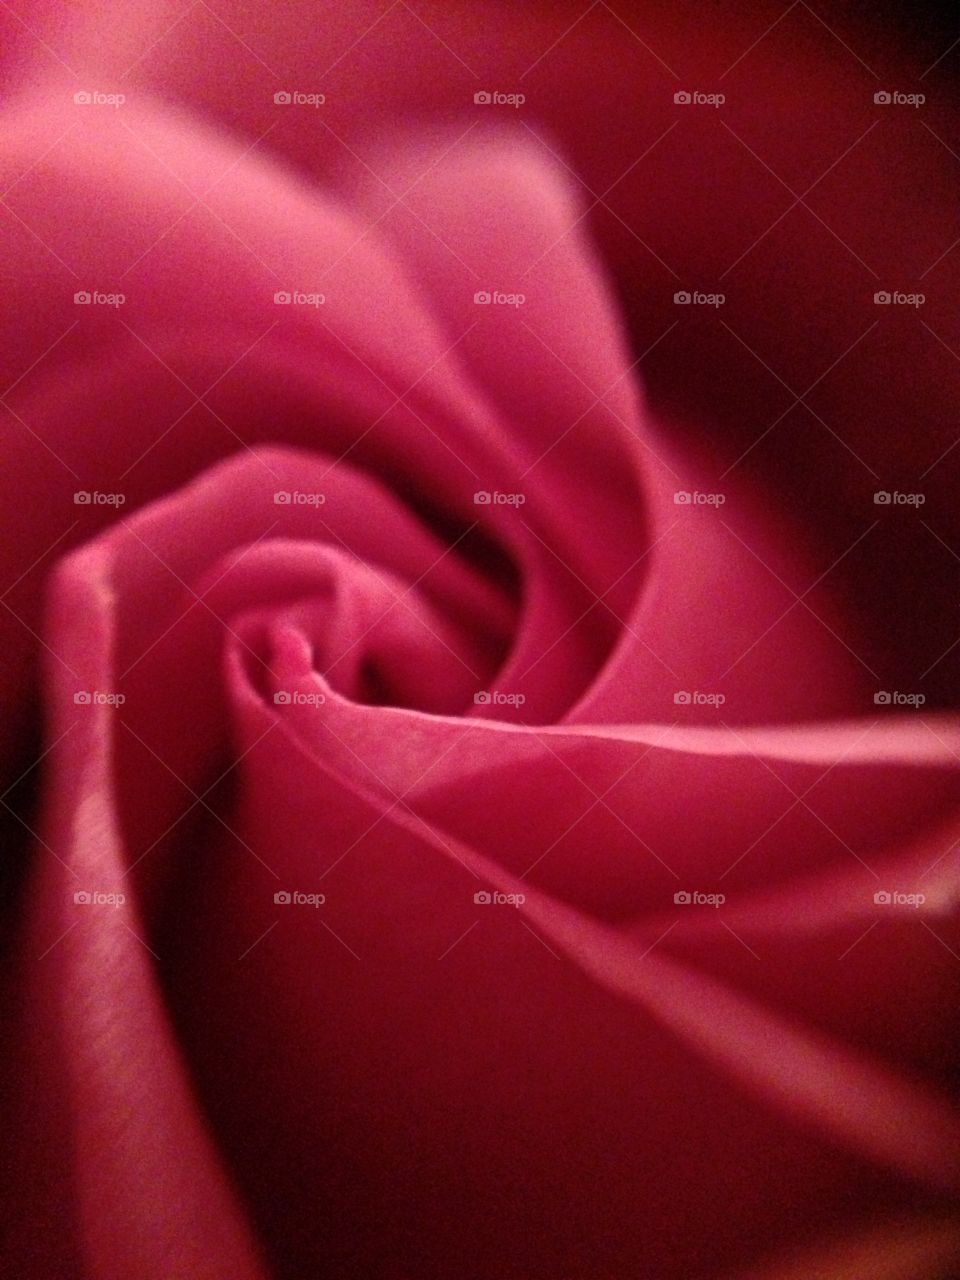 Mini rose , using Macro iphone lens.